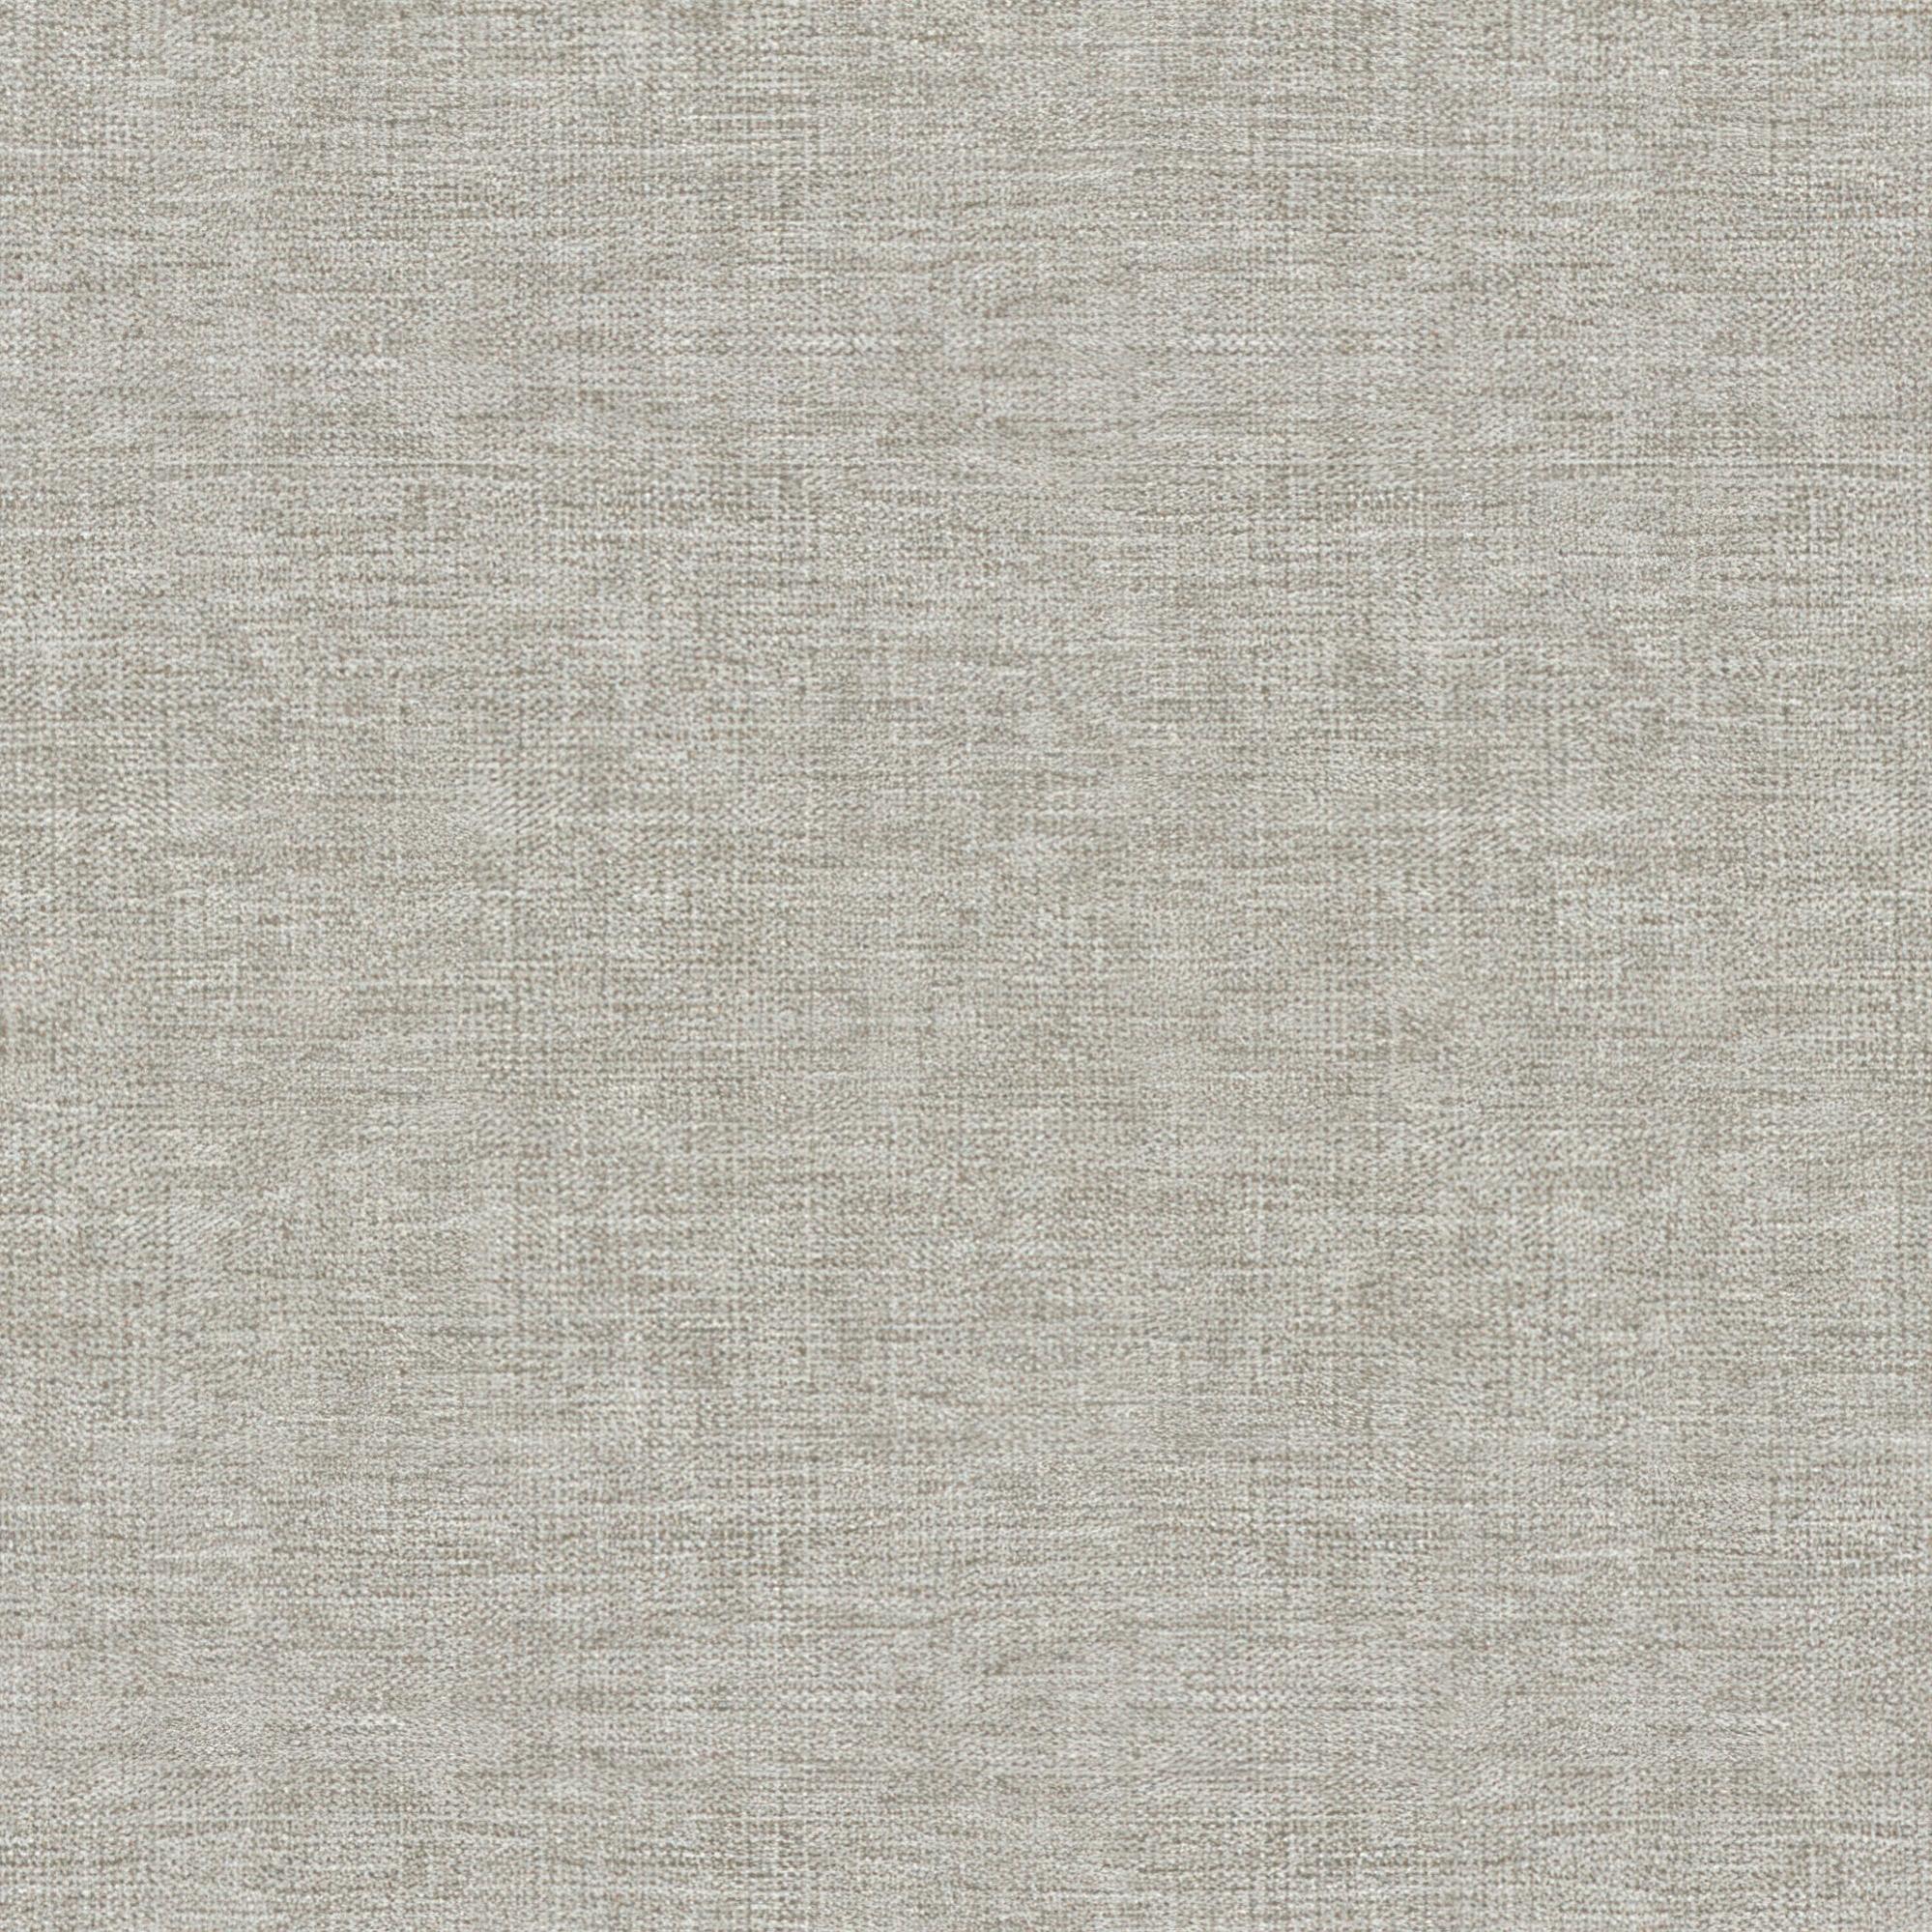 Tela al corte tapicería jacquard bruselas lino ancho 280 cm